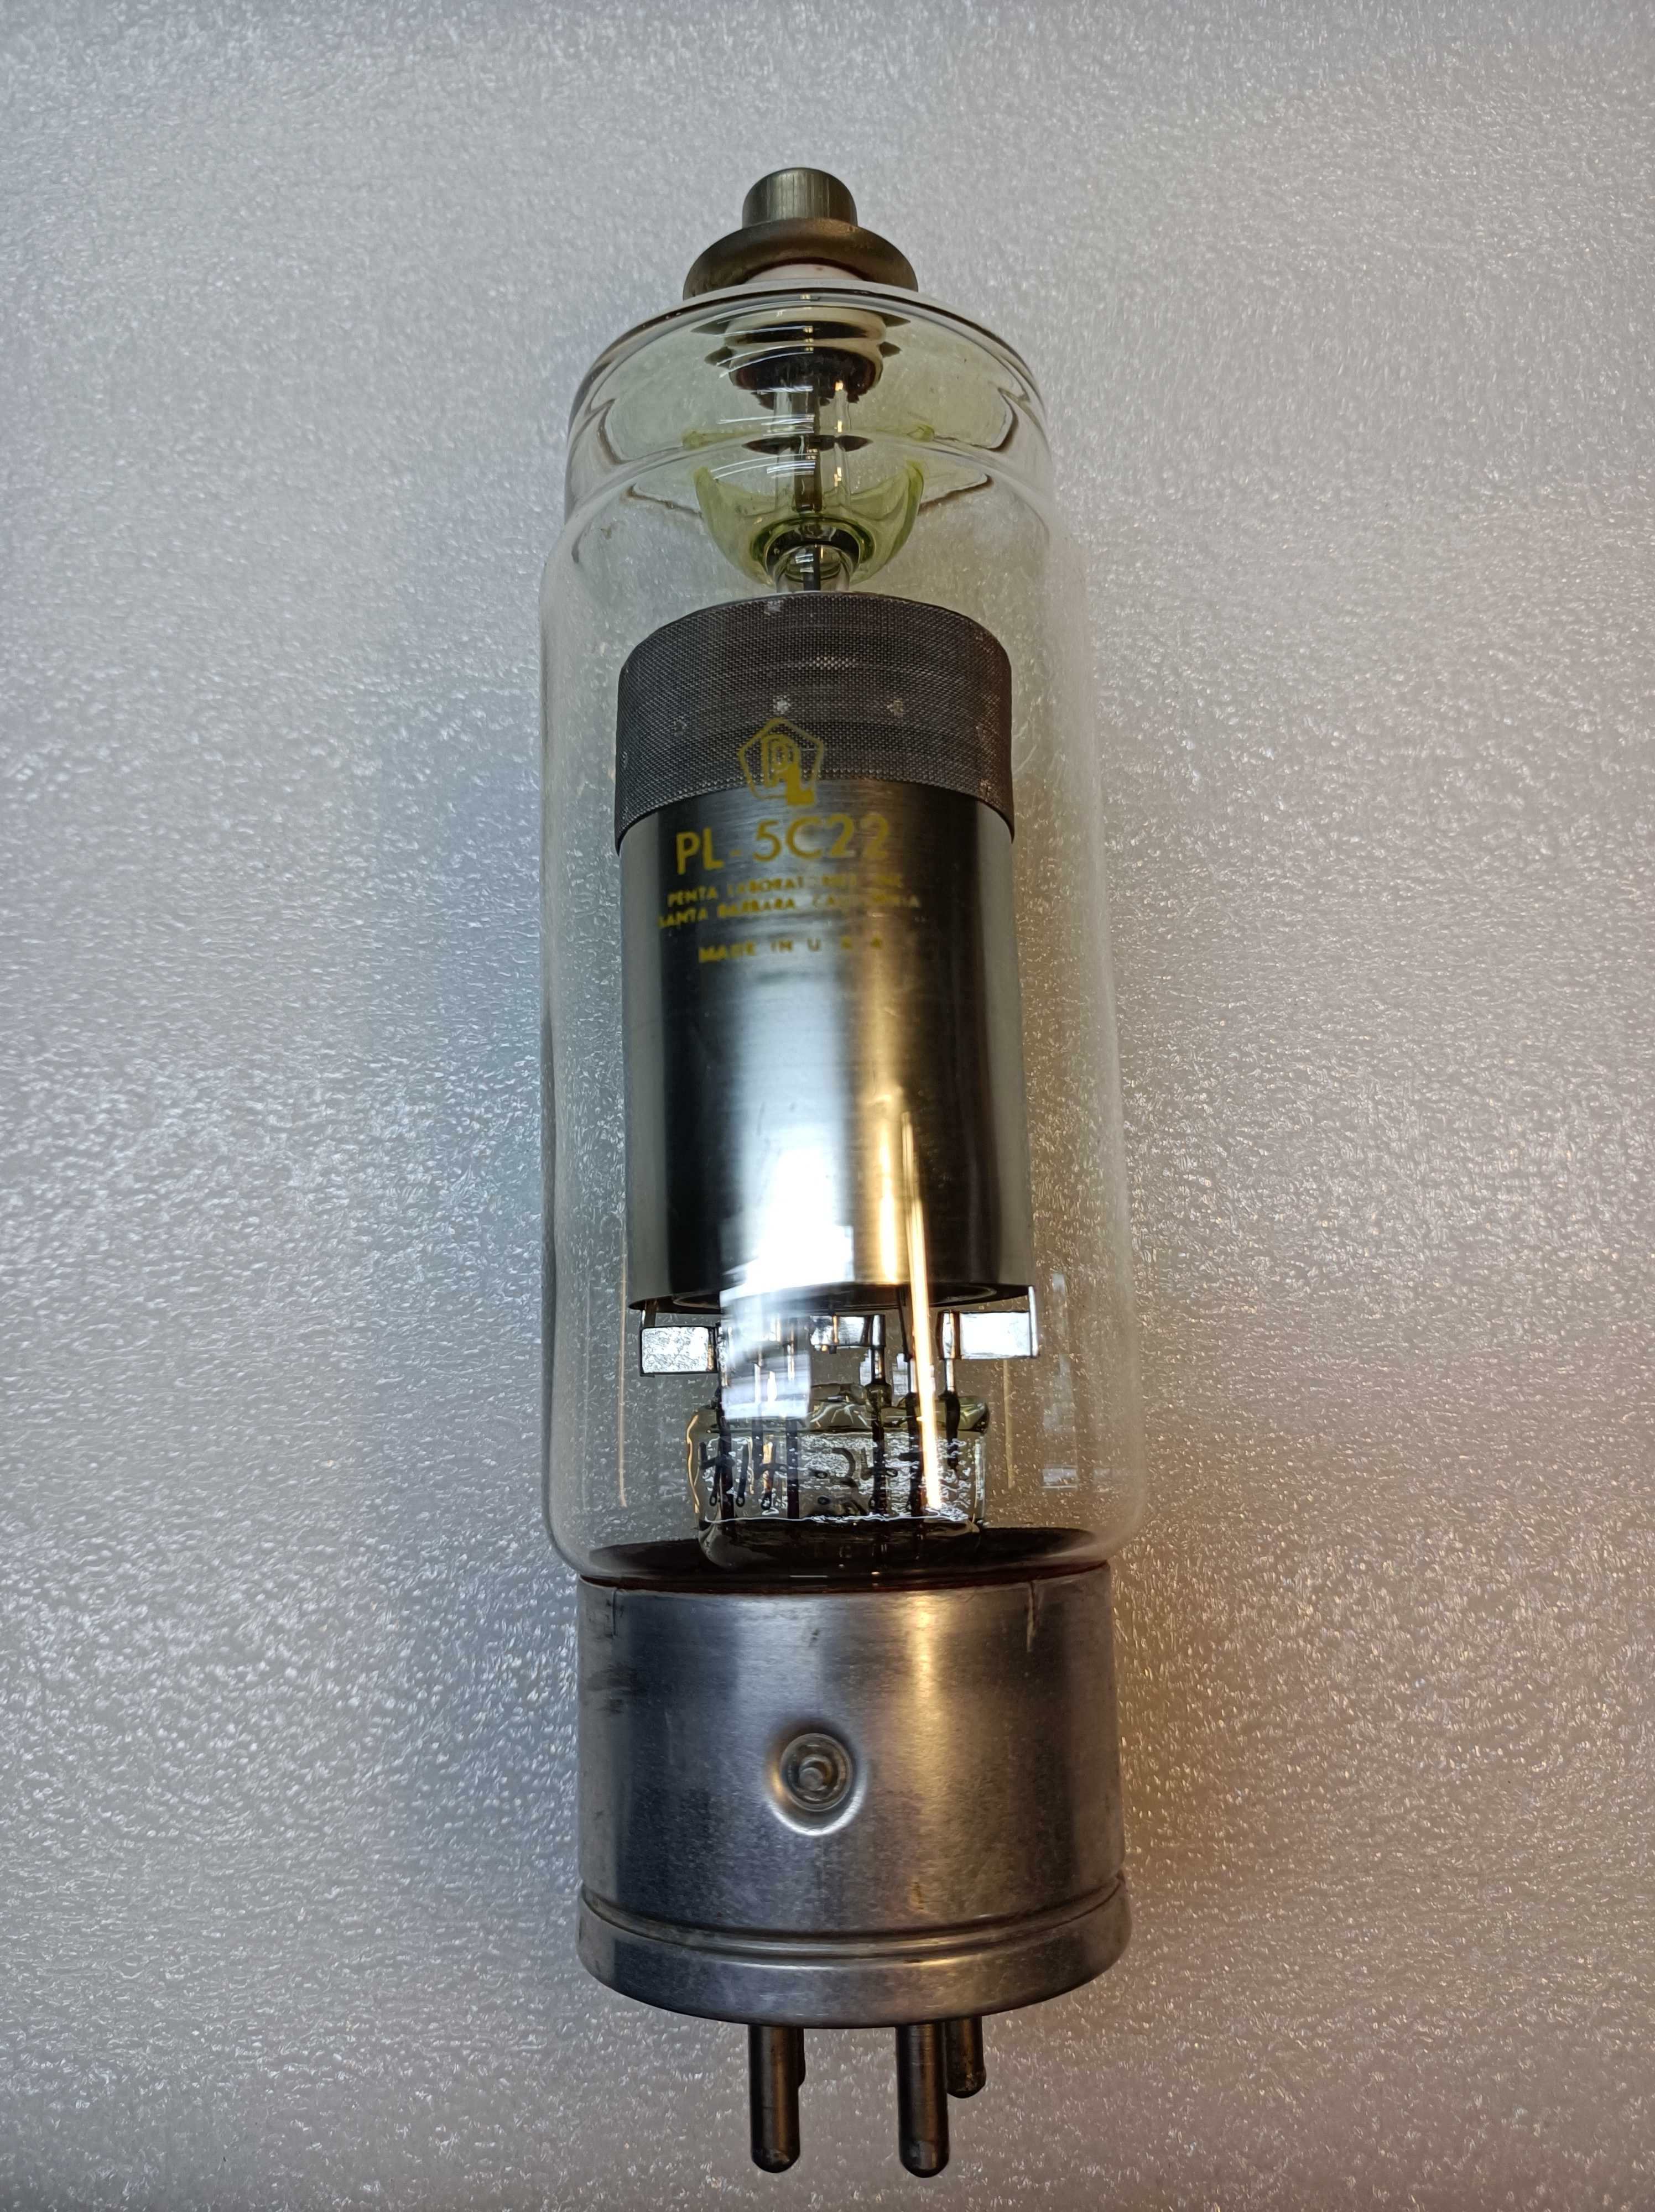 Penta JAN-CBZC/PL-5C22 Hydrogen Thyratron Vacuum Tube